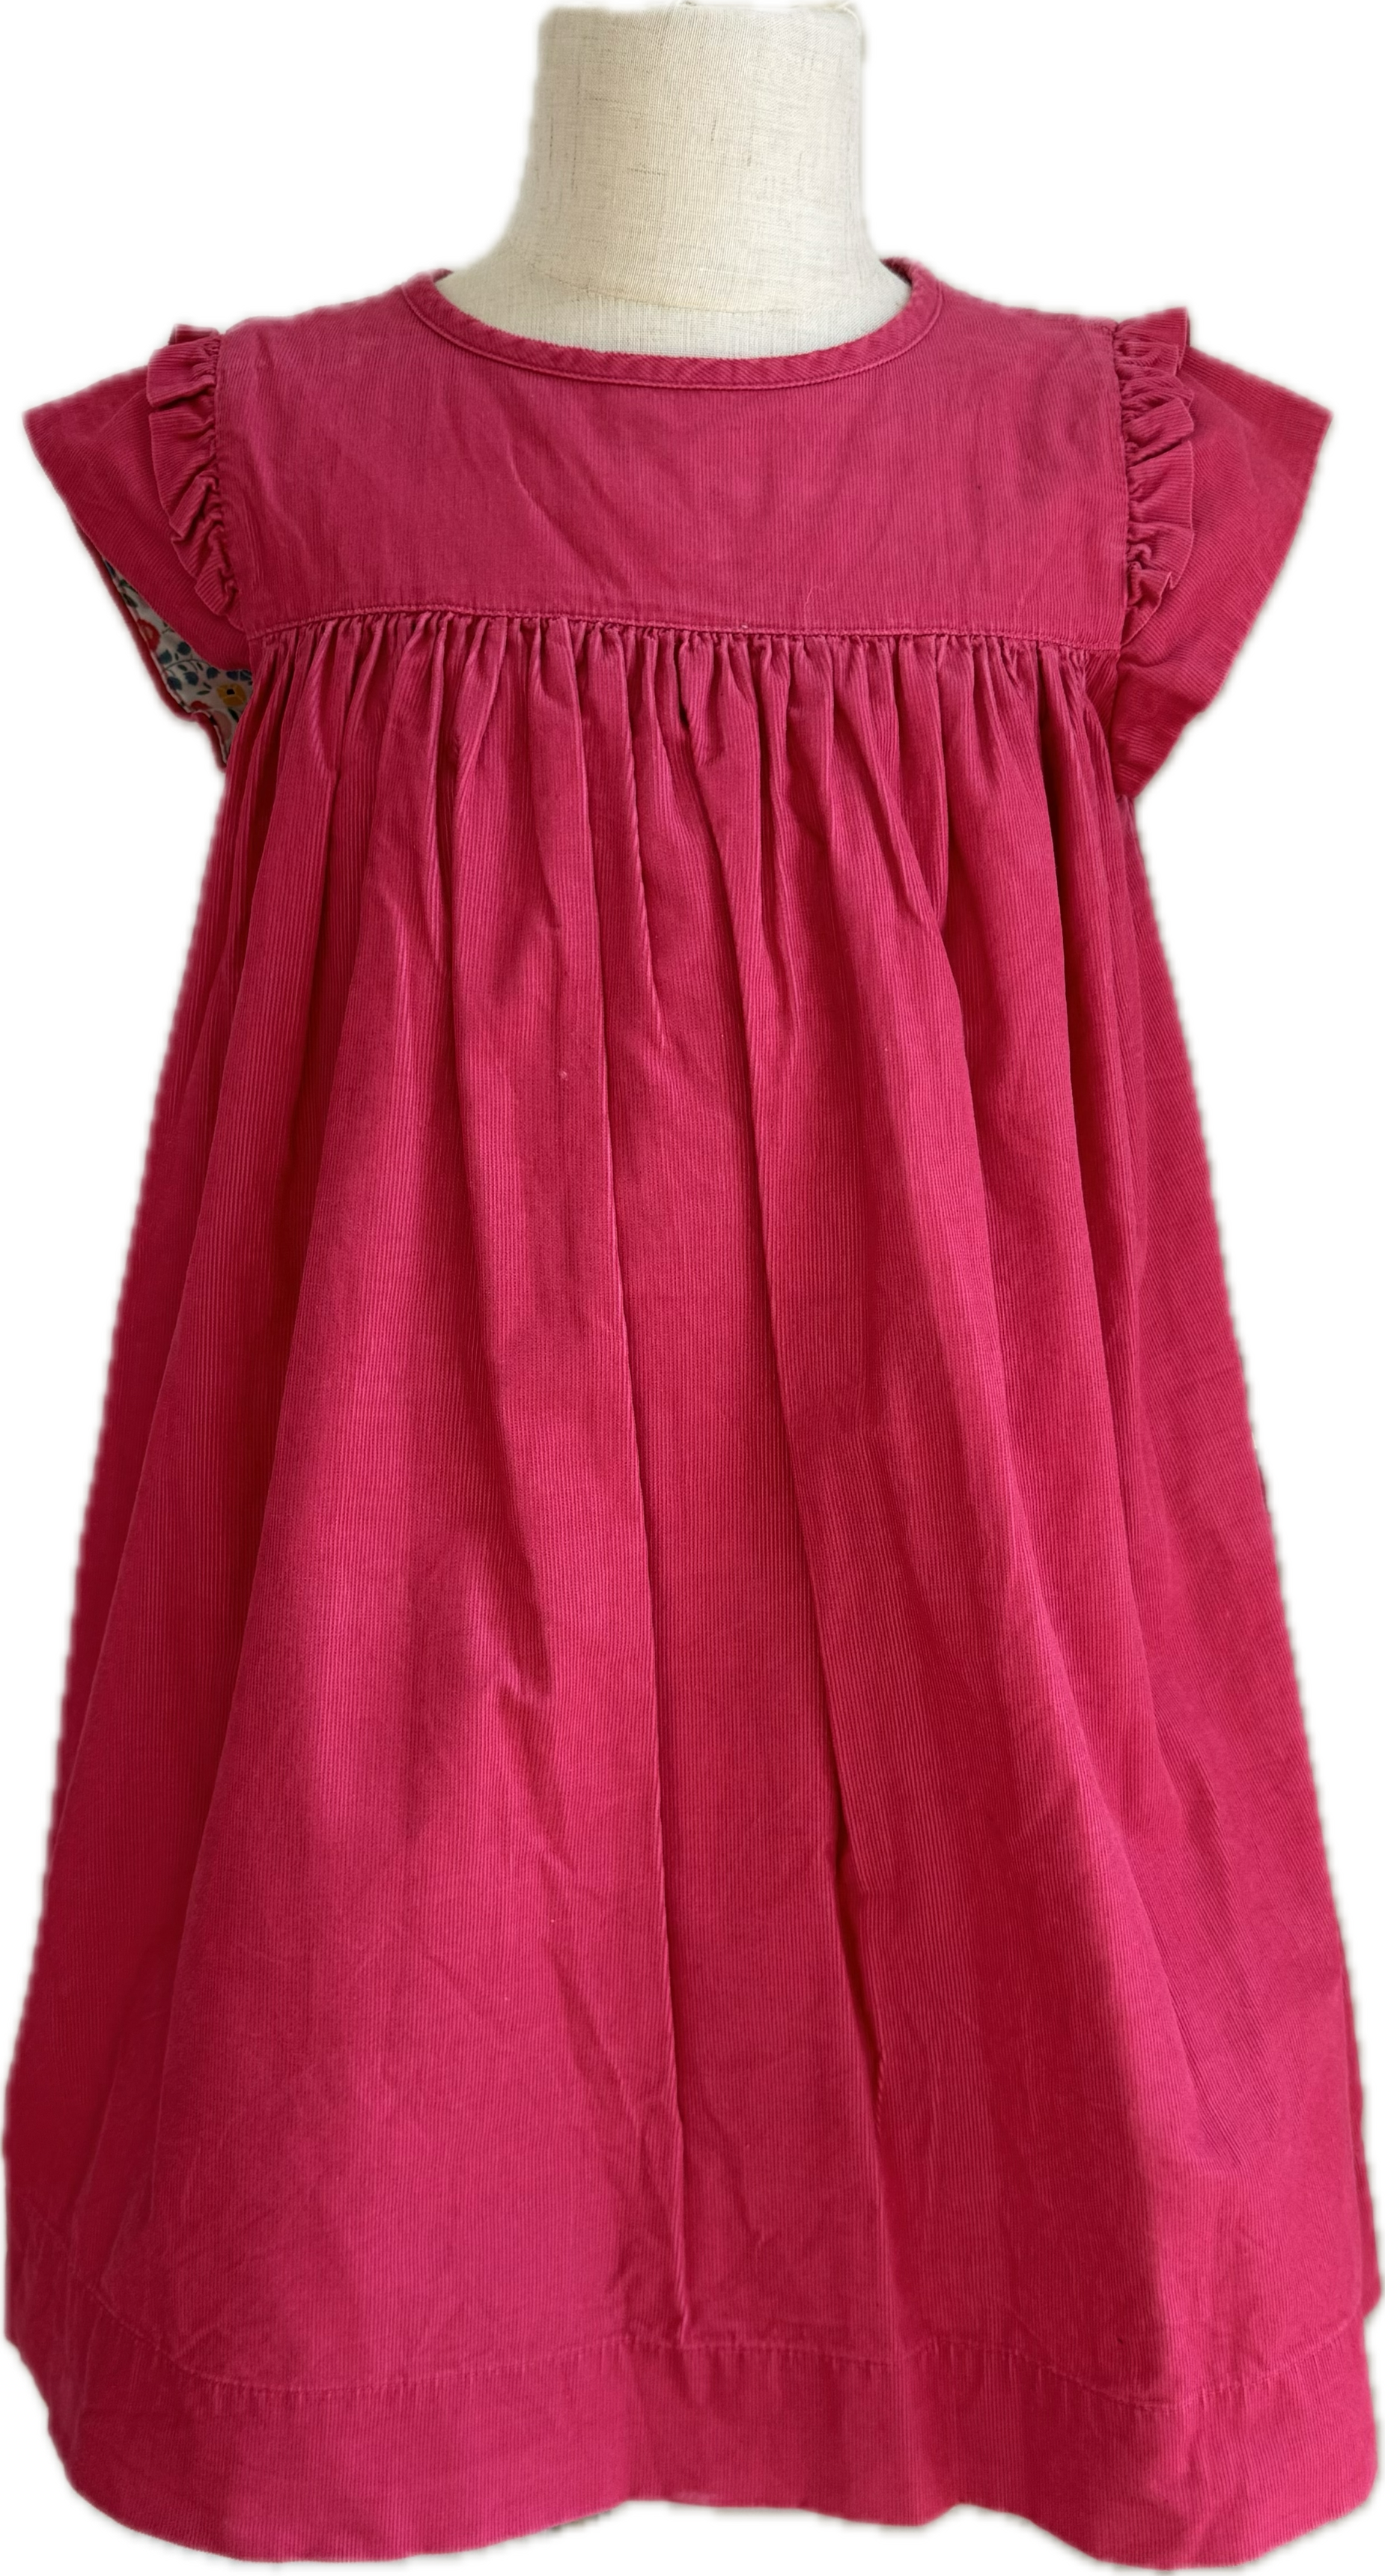 Mini Boden Corduroy Dress, Dark Pink Girls Size 6/7